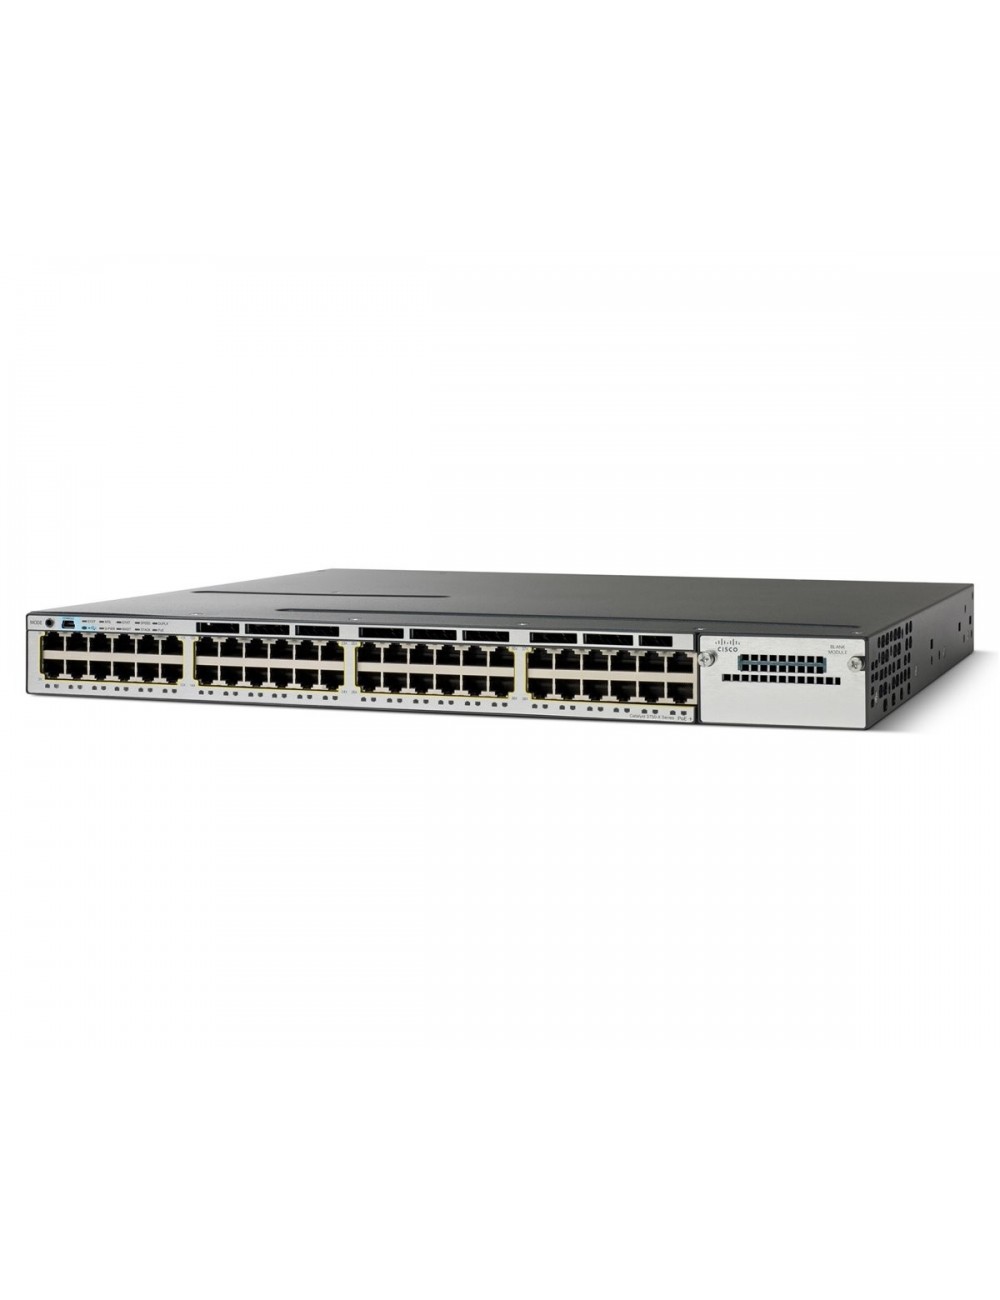 Cisco WS-C3750X-48P-E managed gigabit switch